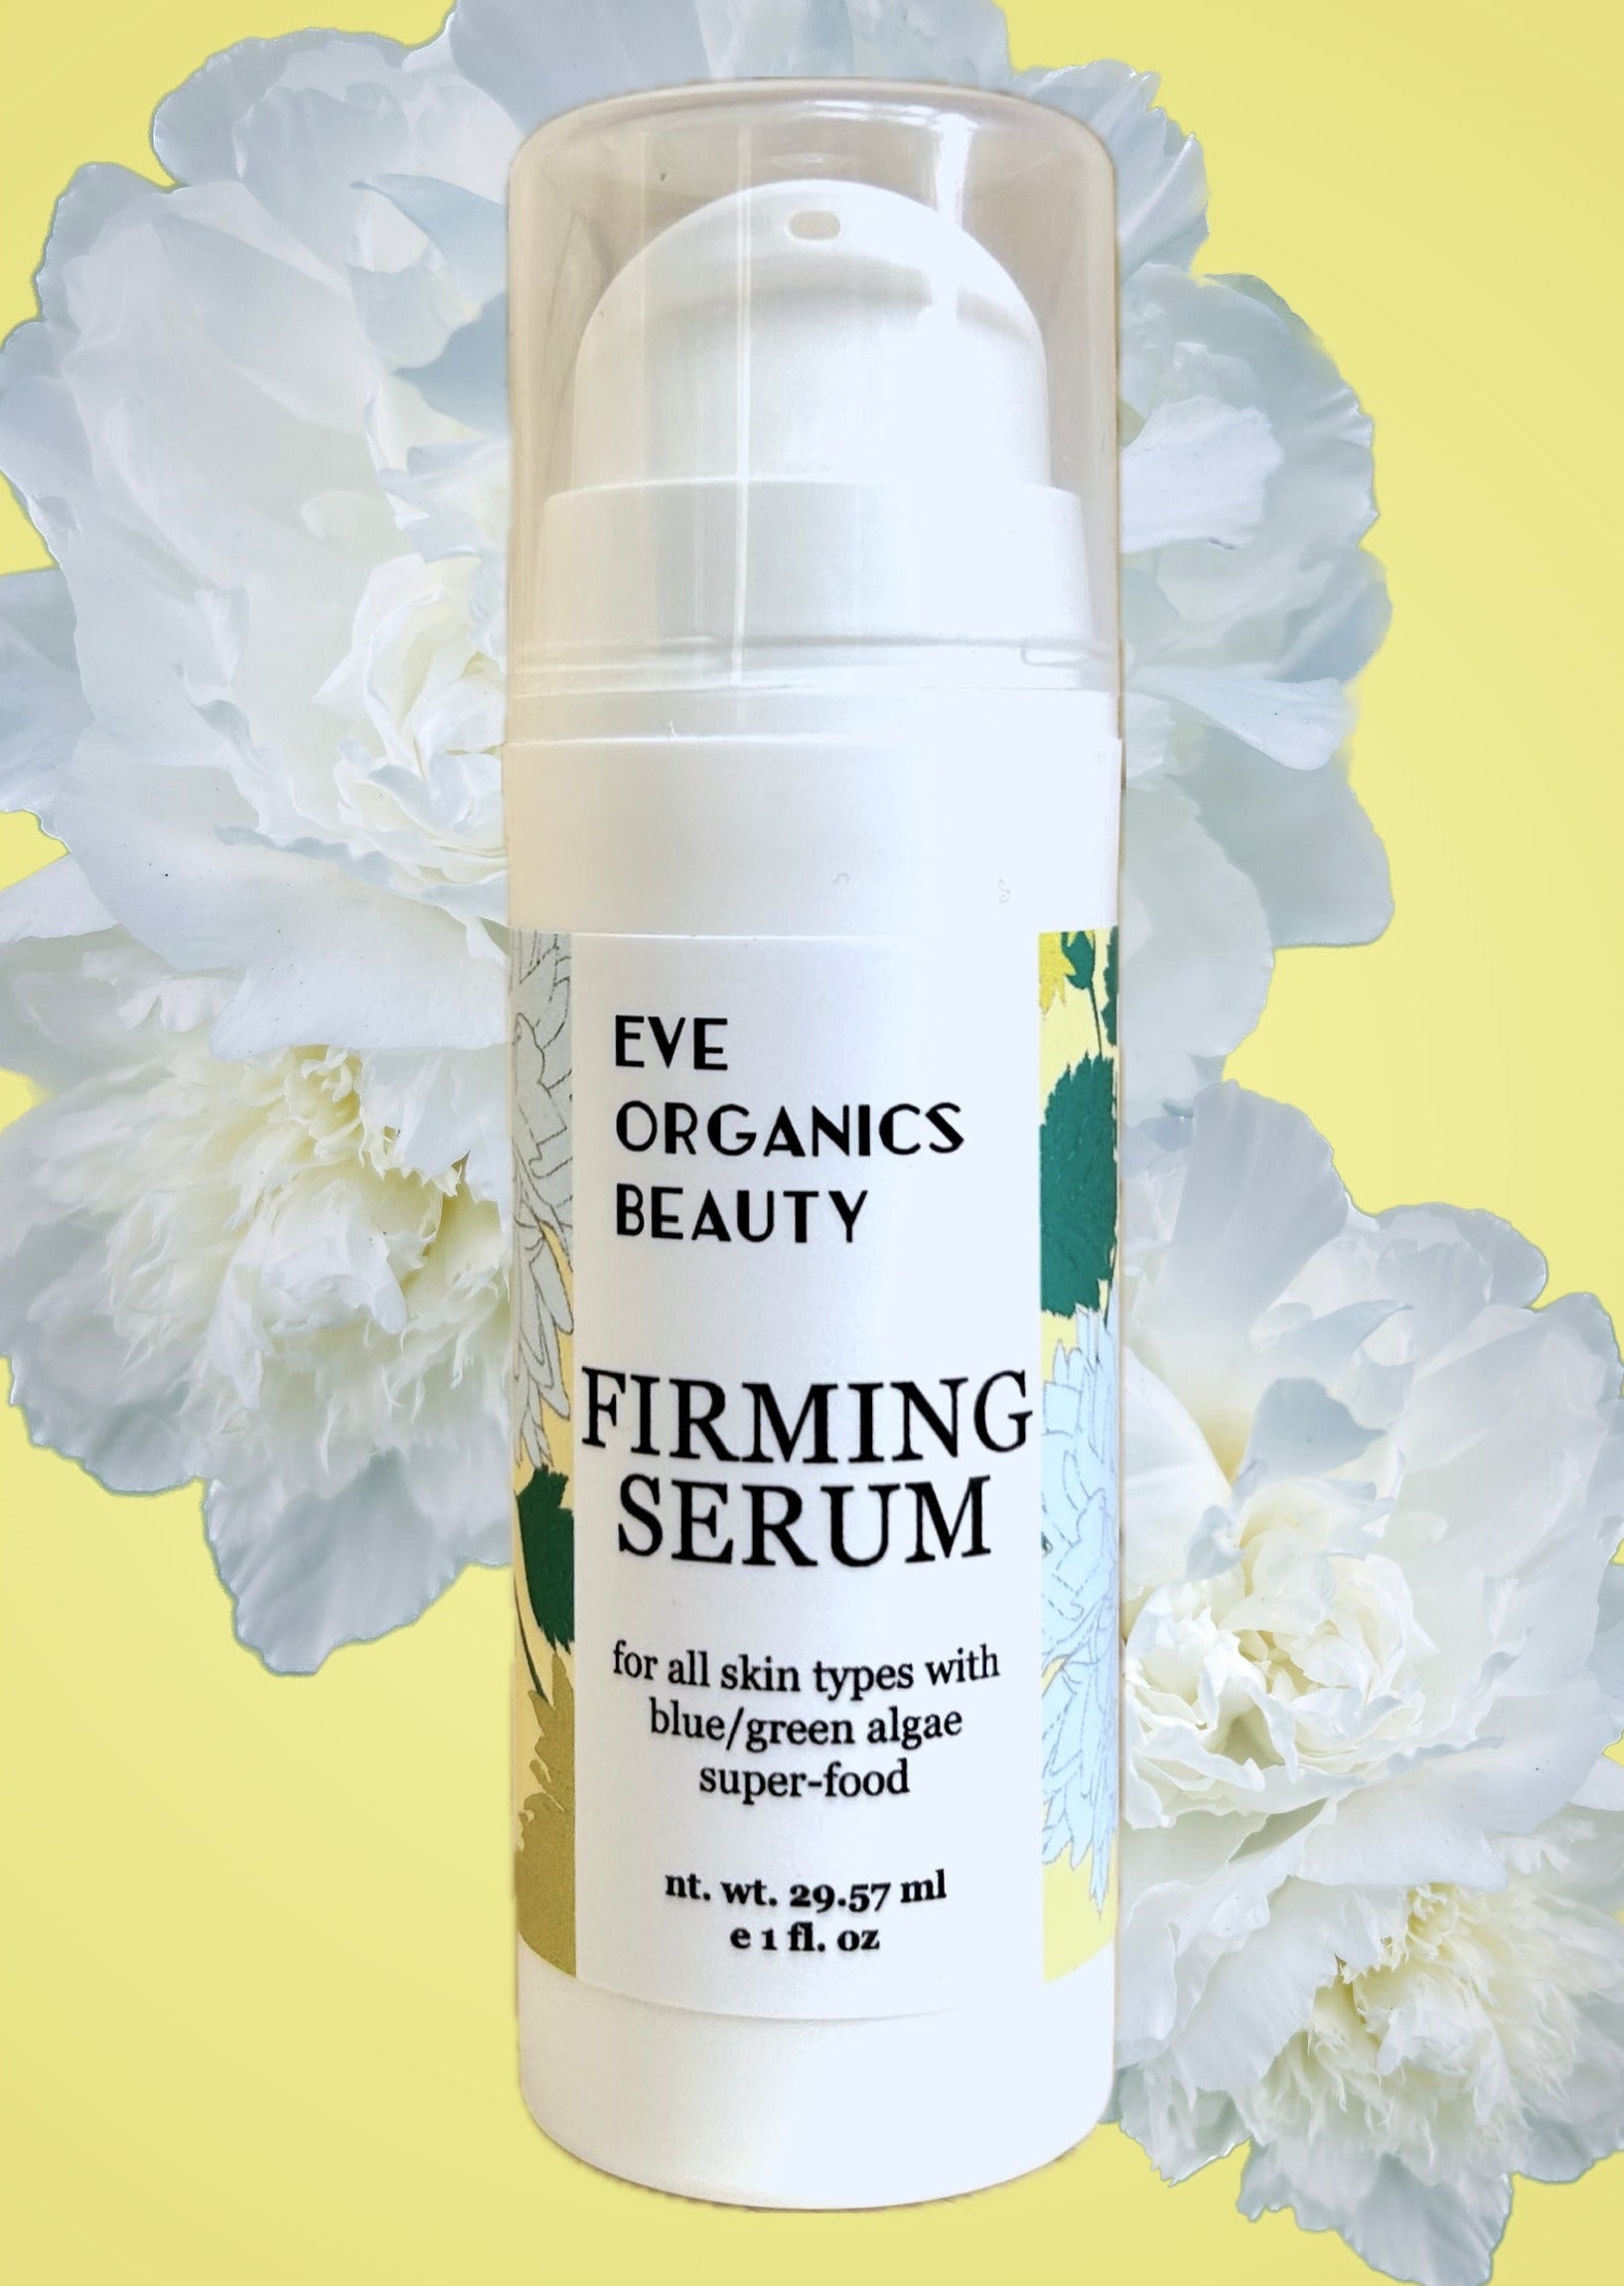 FIRMING SERUM / Universal / All Skin Types - Eve Organics Beauty